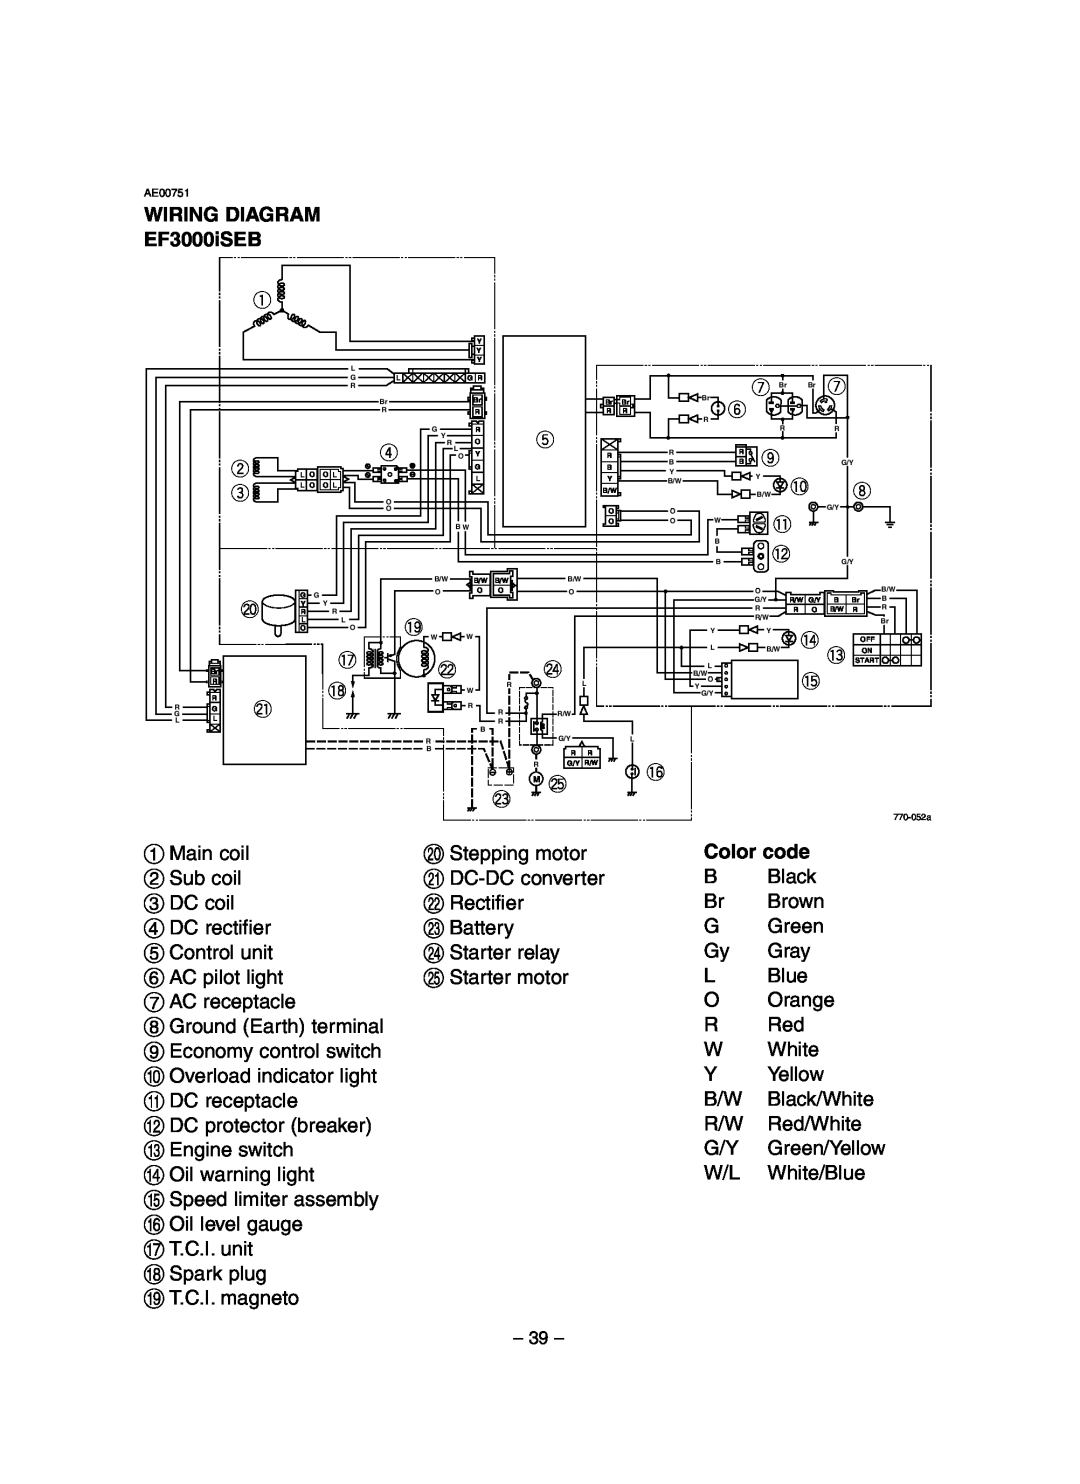 Yamaha EF3000iSE, EF3000iSEB owner manual WIRING DIAGRAM EF3000iSEB, Color code 